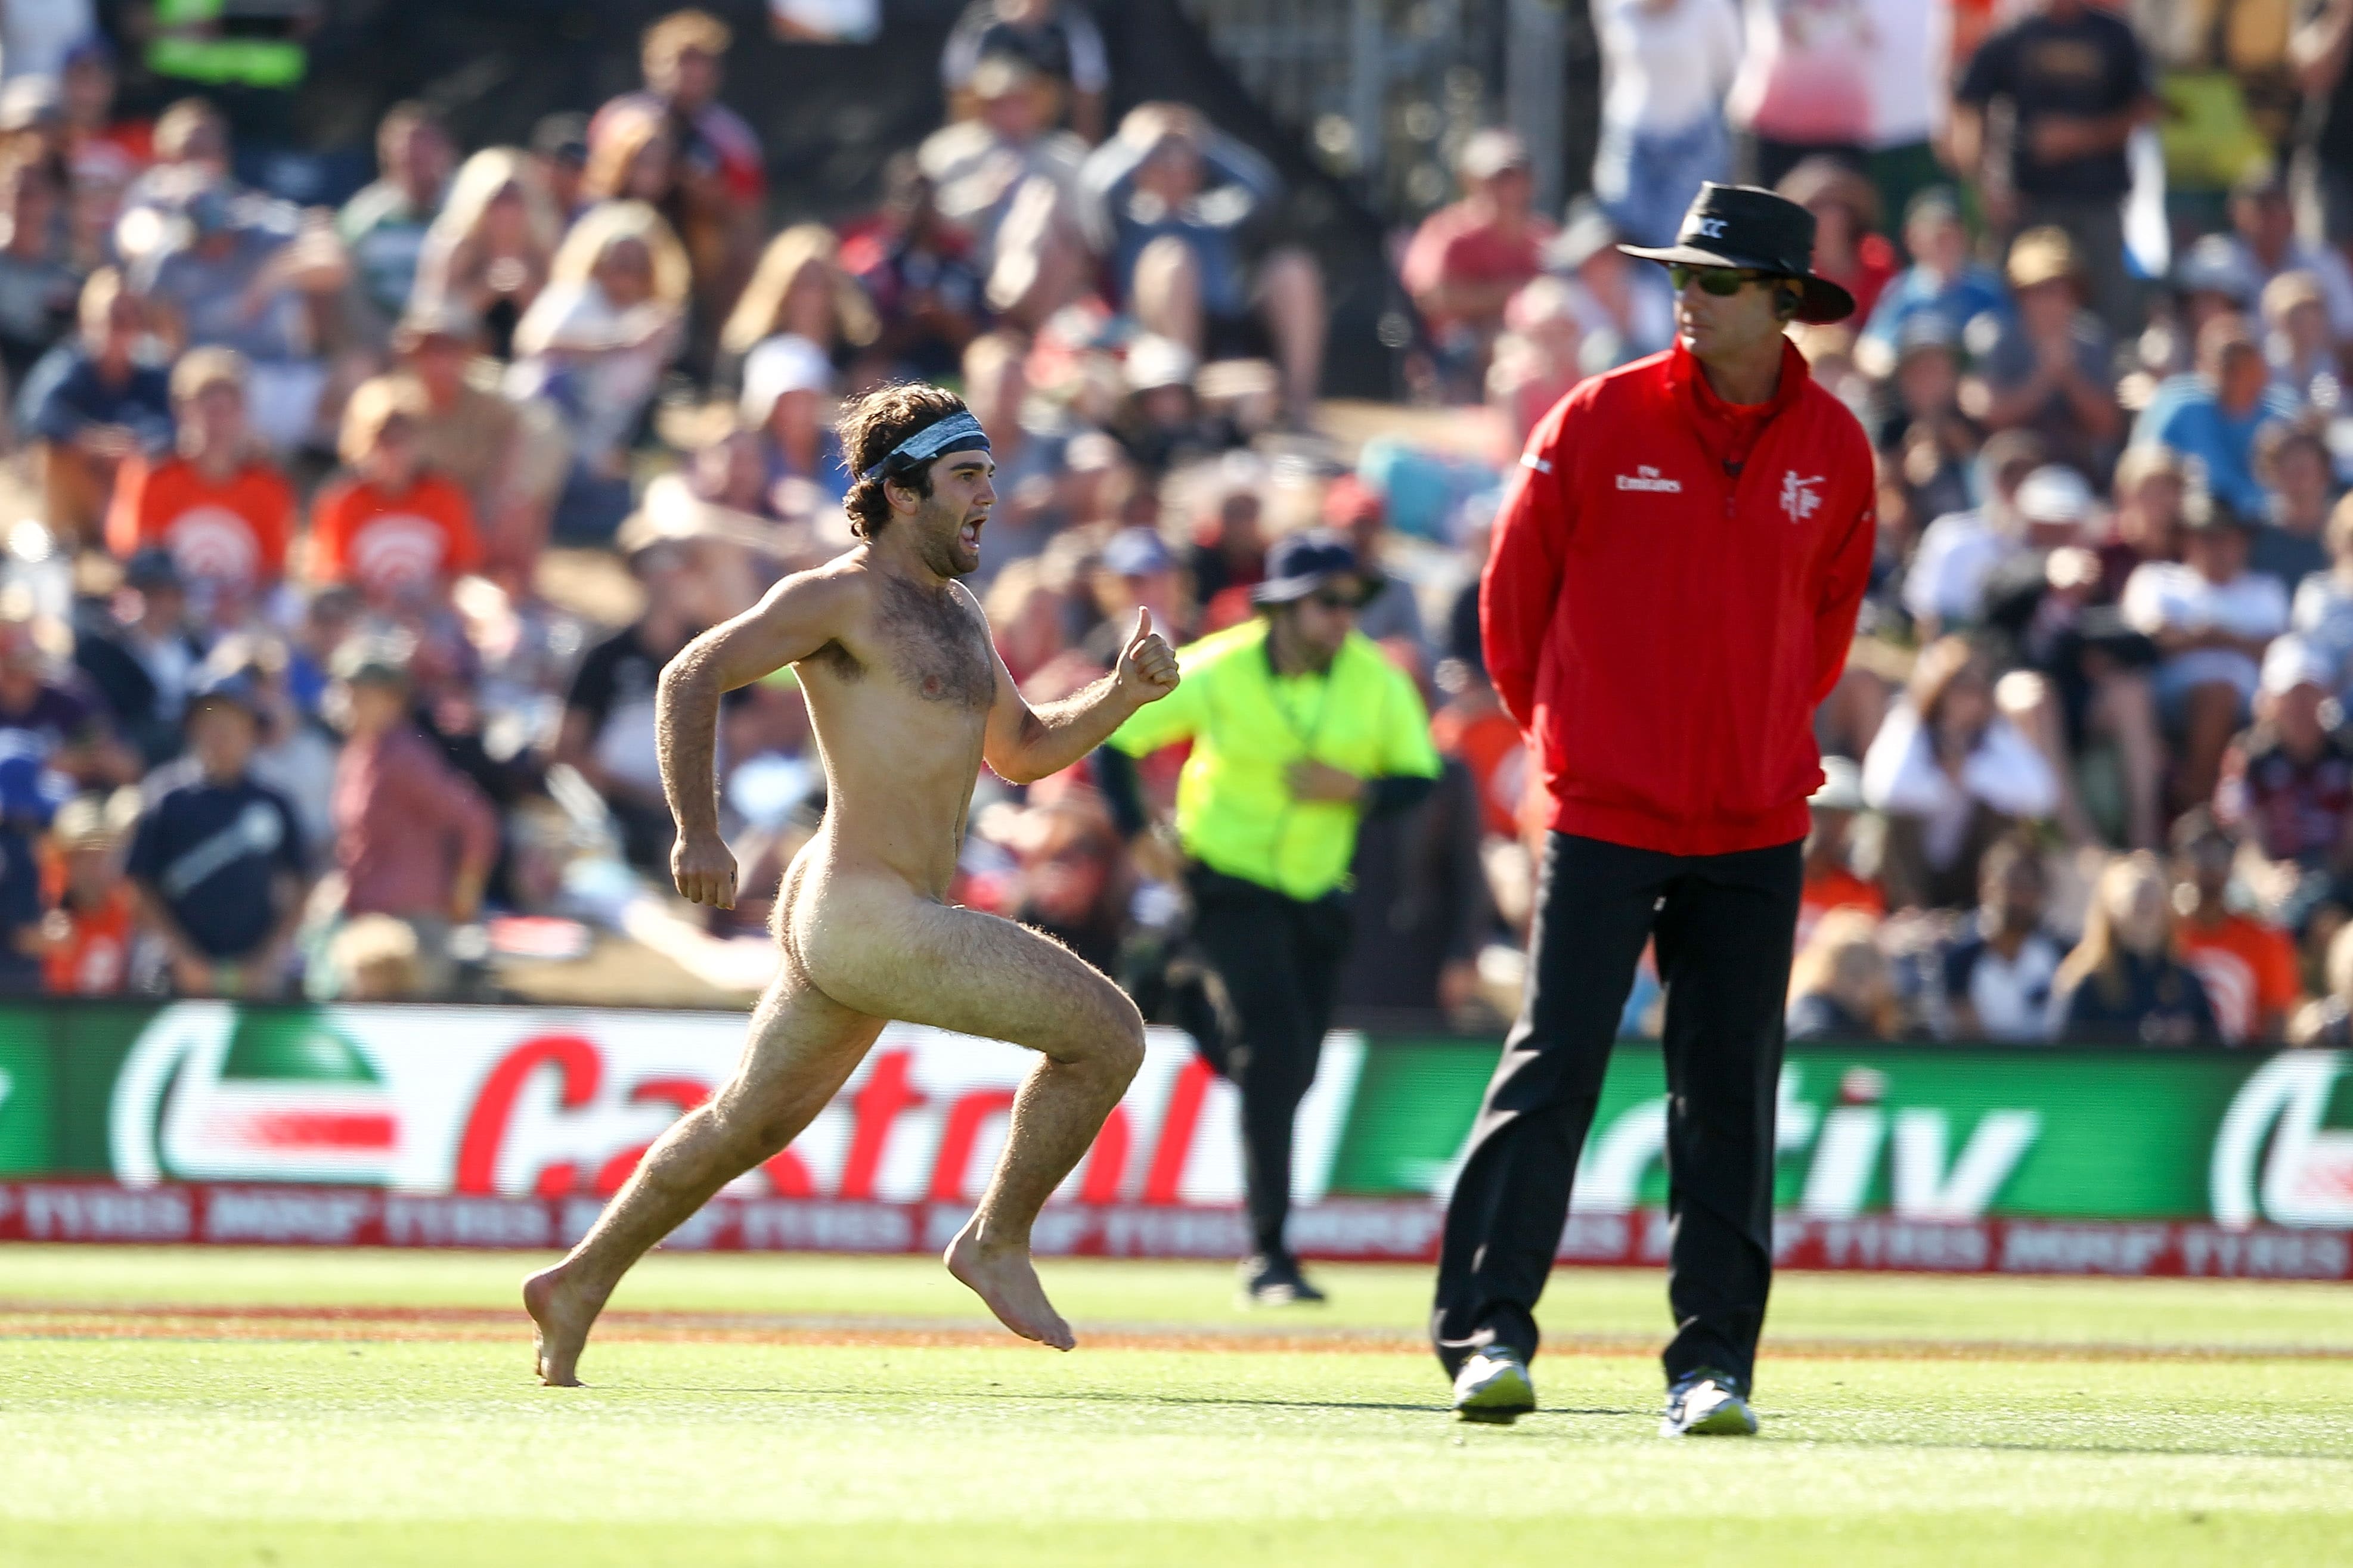 ICC Cricket World Cup 2015: Streaker runs across pitch in England vs Scotland Pool A ...3947 x 2631